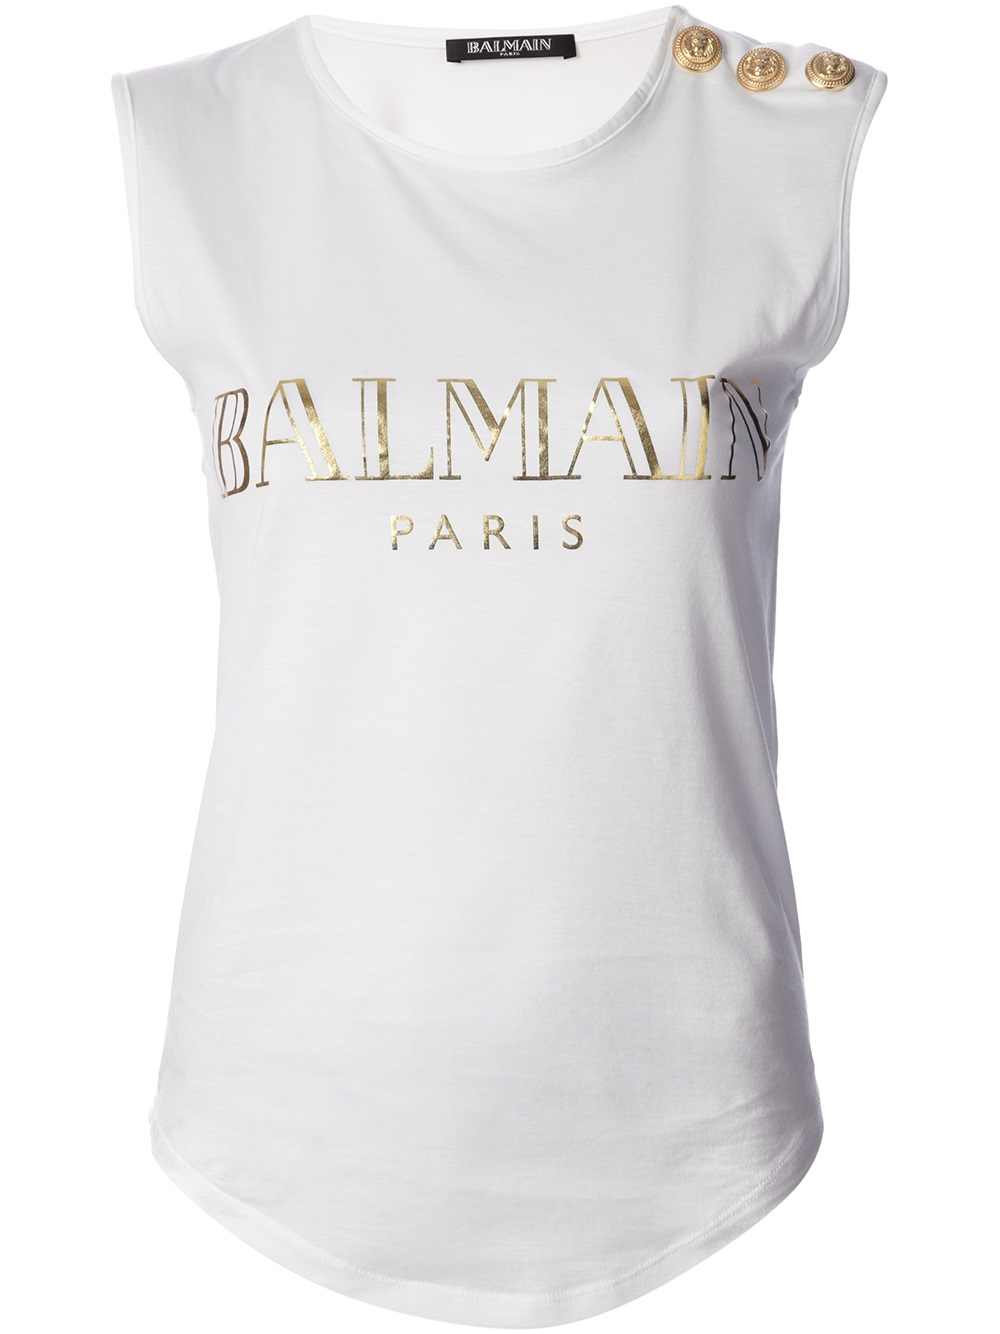 Balmain Brand Print T-Shirt in White - Lyst